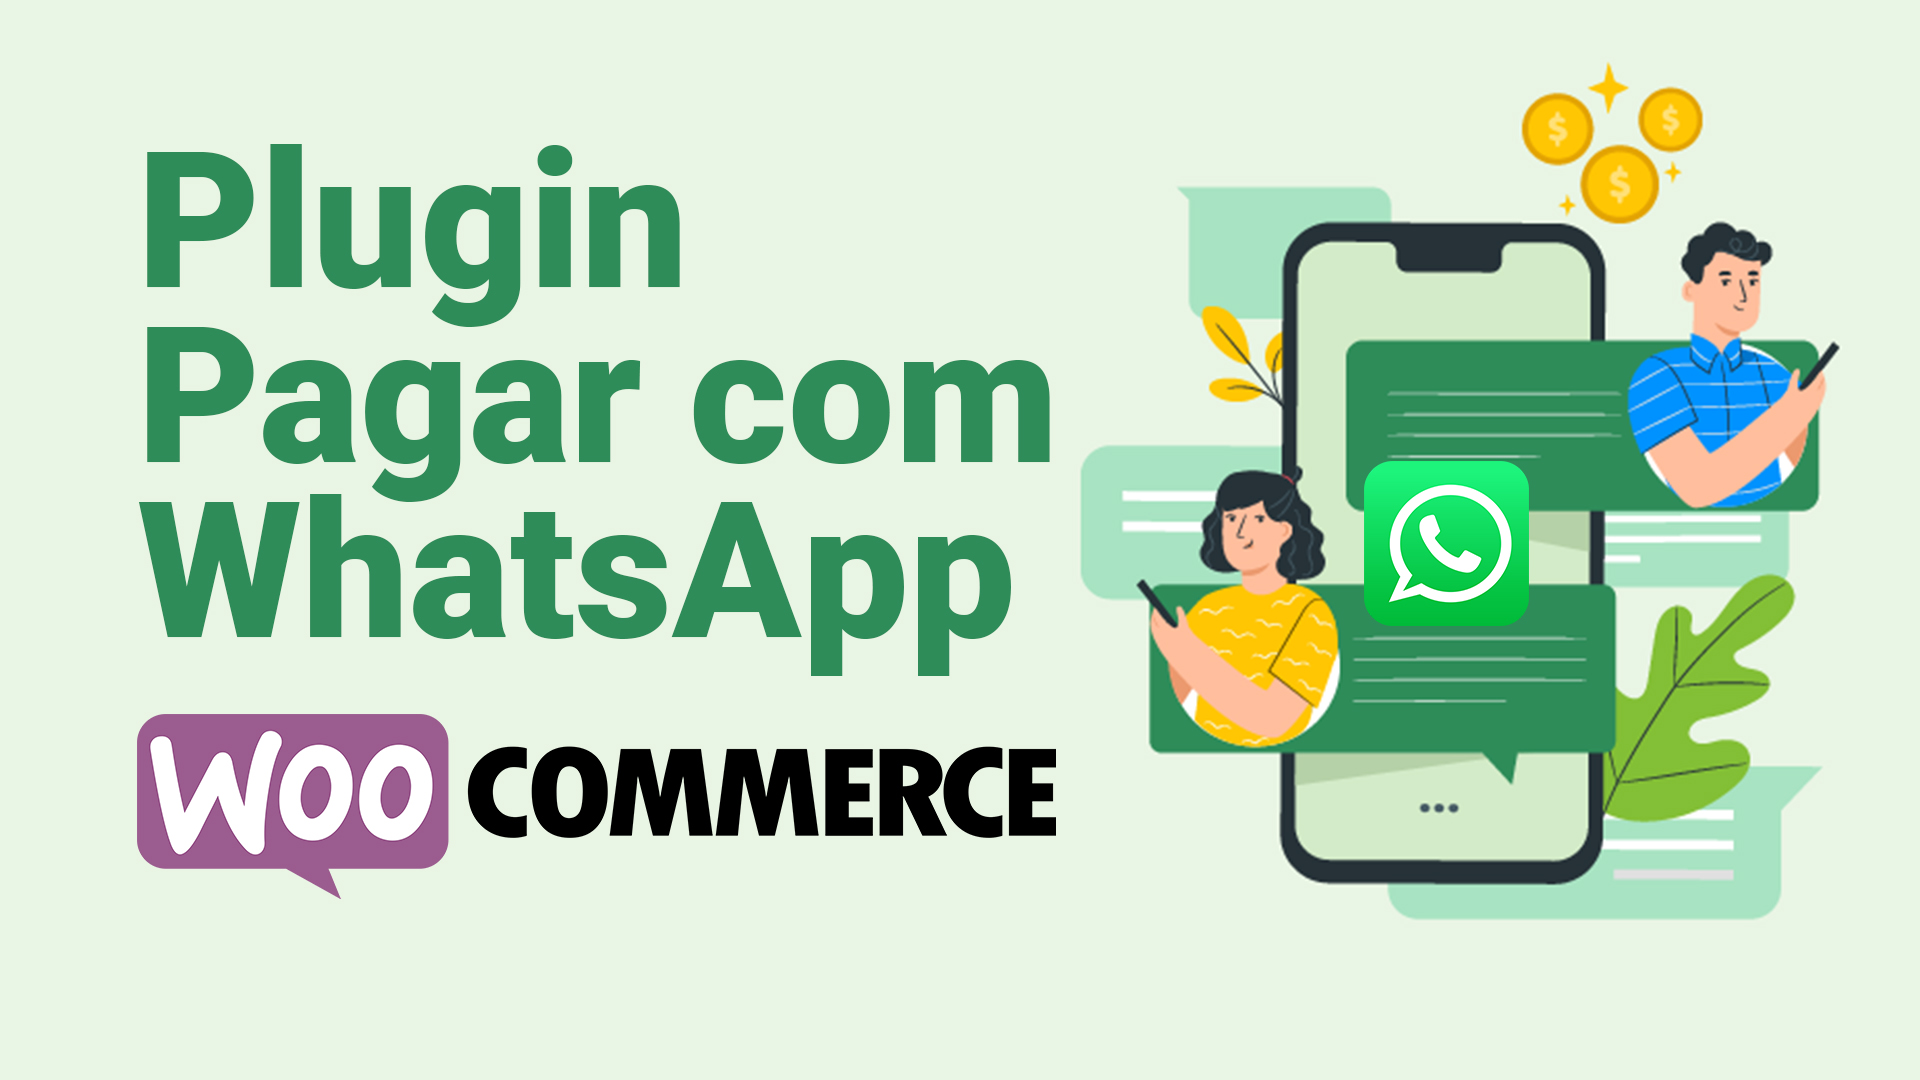 Plugin pagar com WhatsApp para WooCommerce